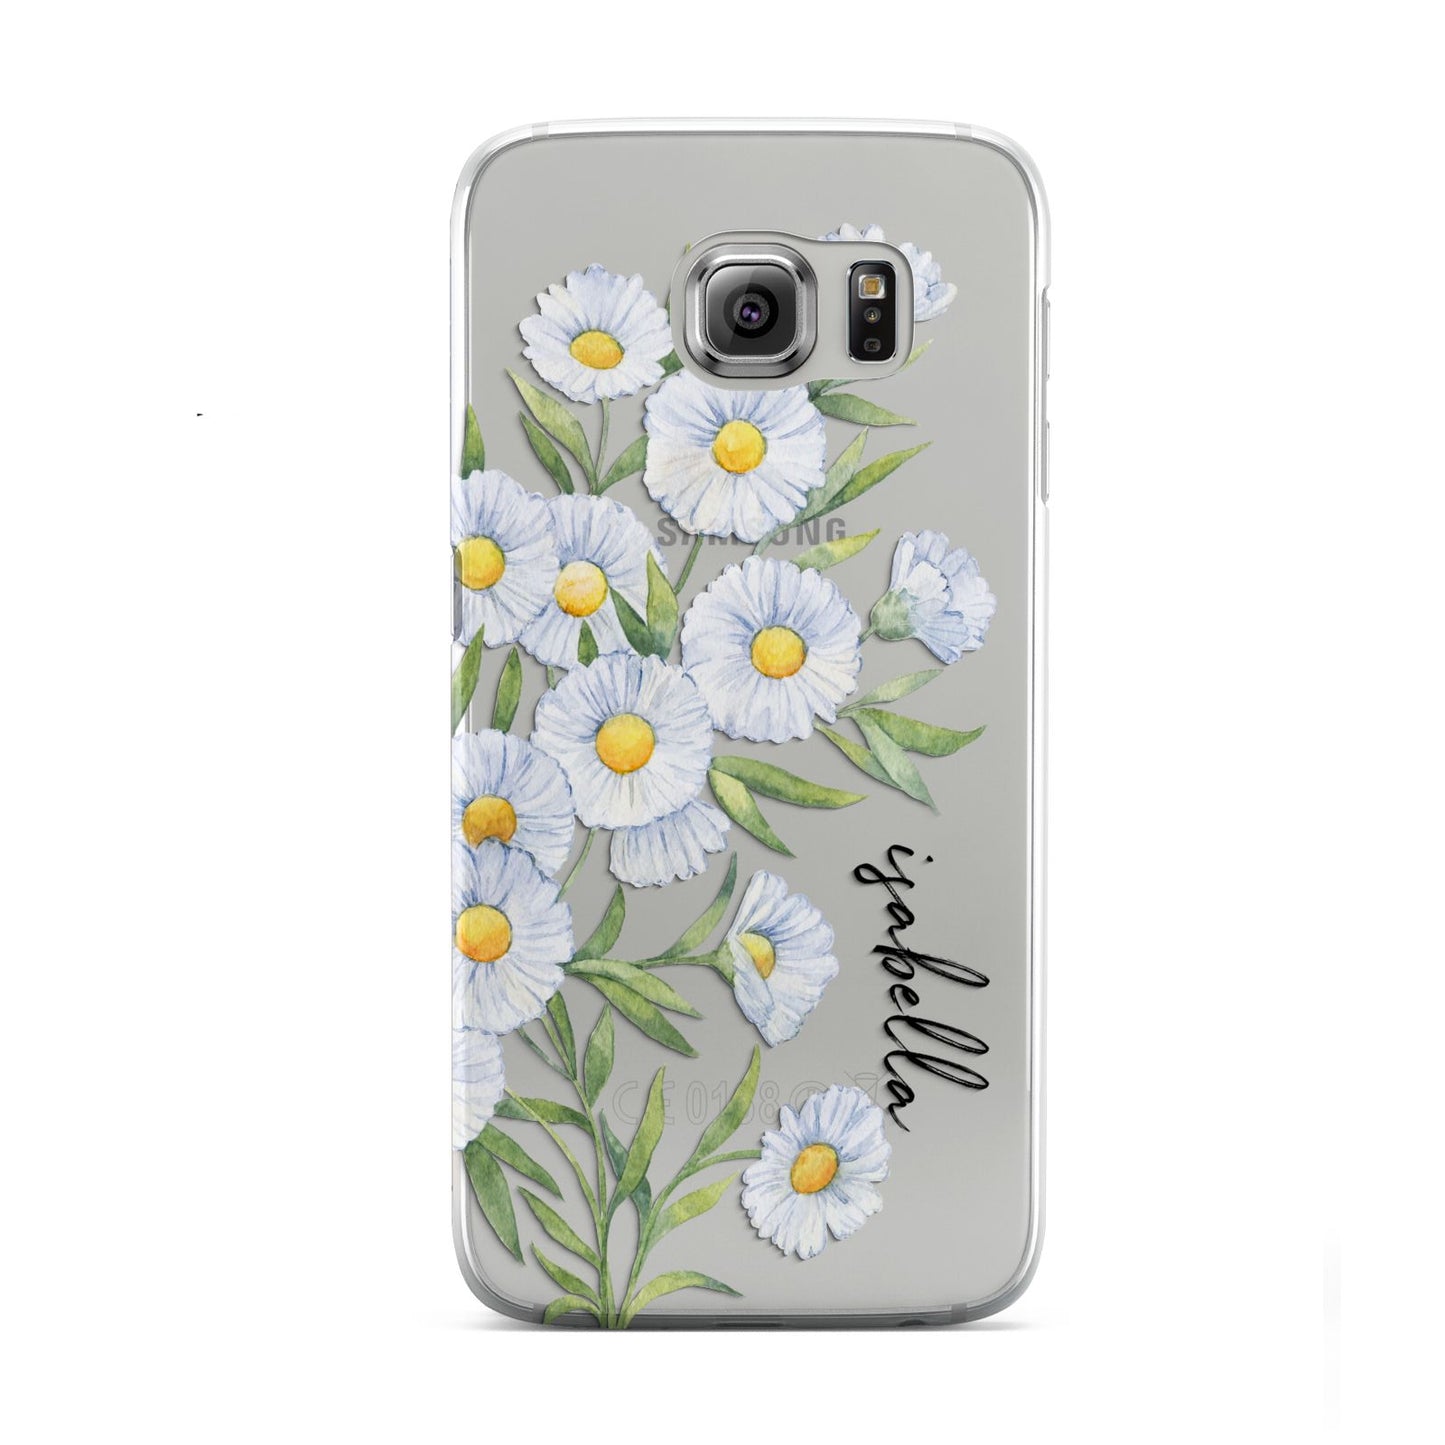 Personalised Daisy Flower Samsung Galaxy S6 Case